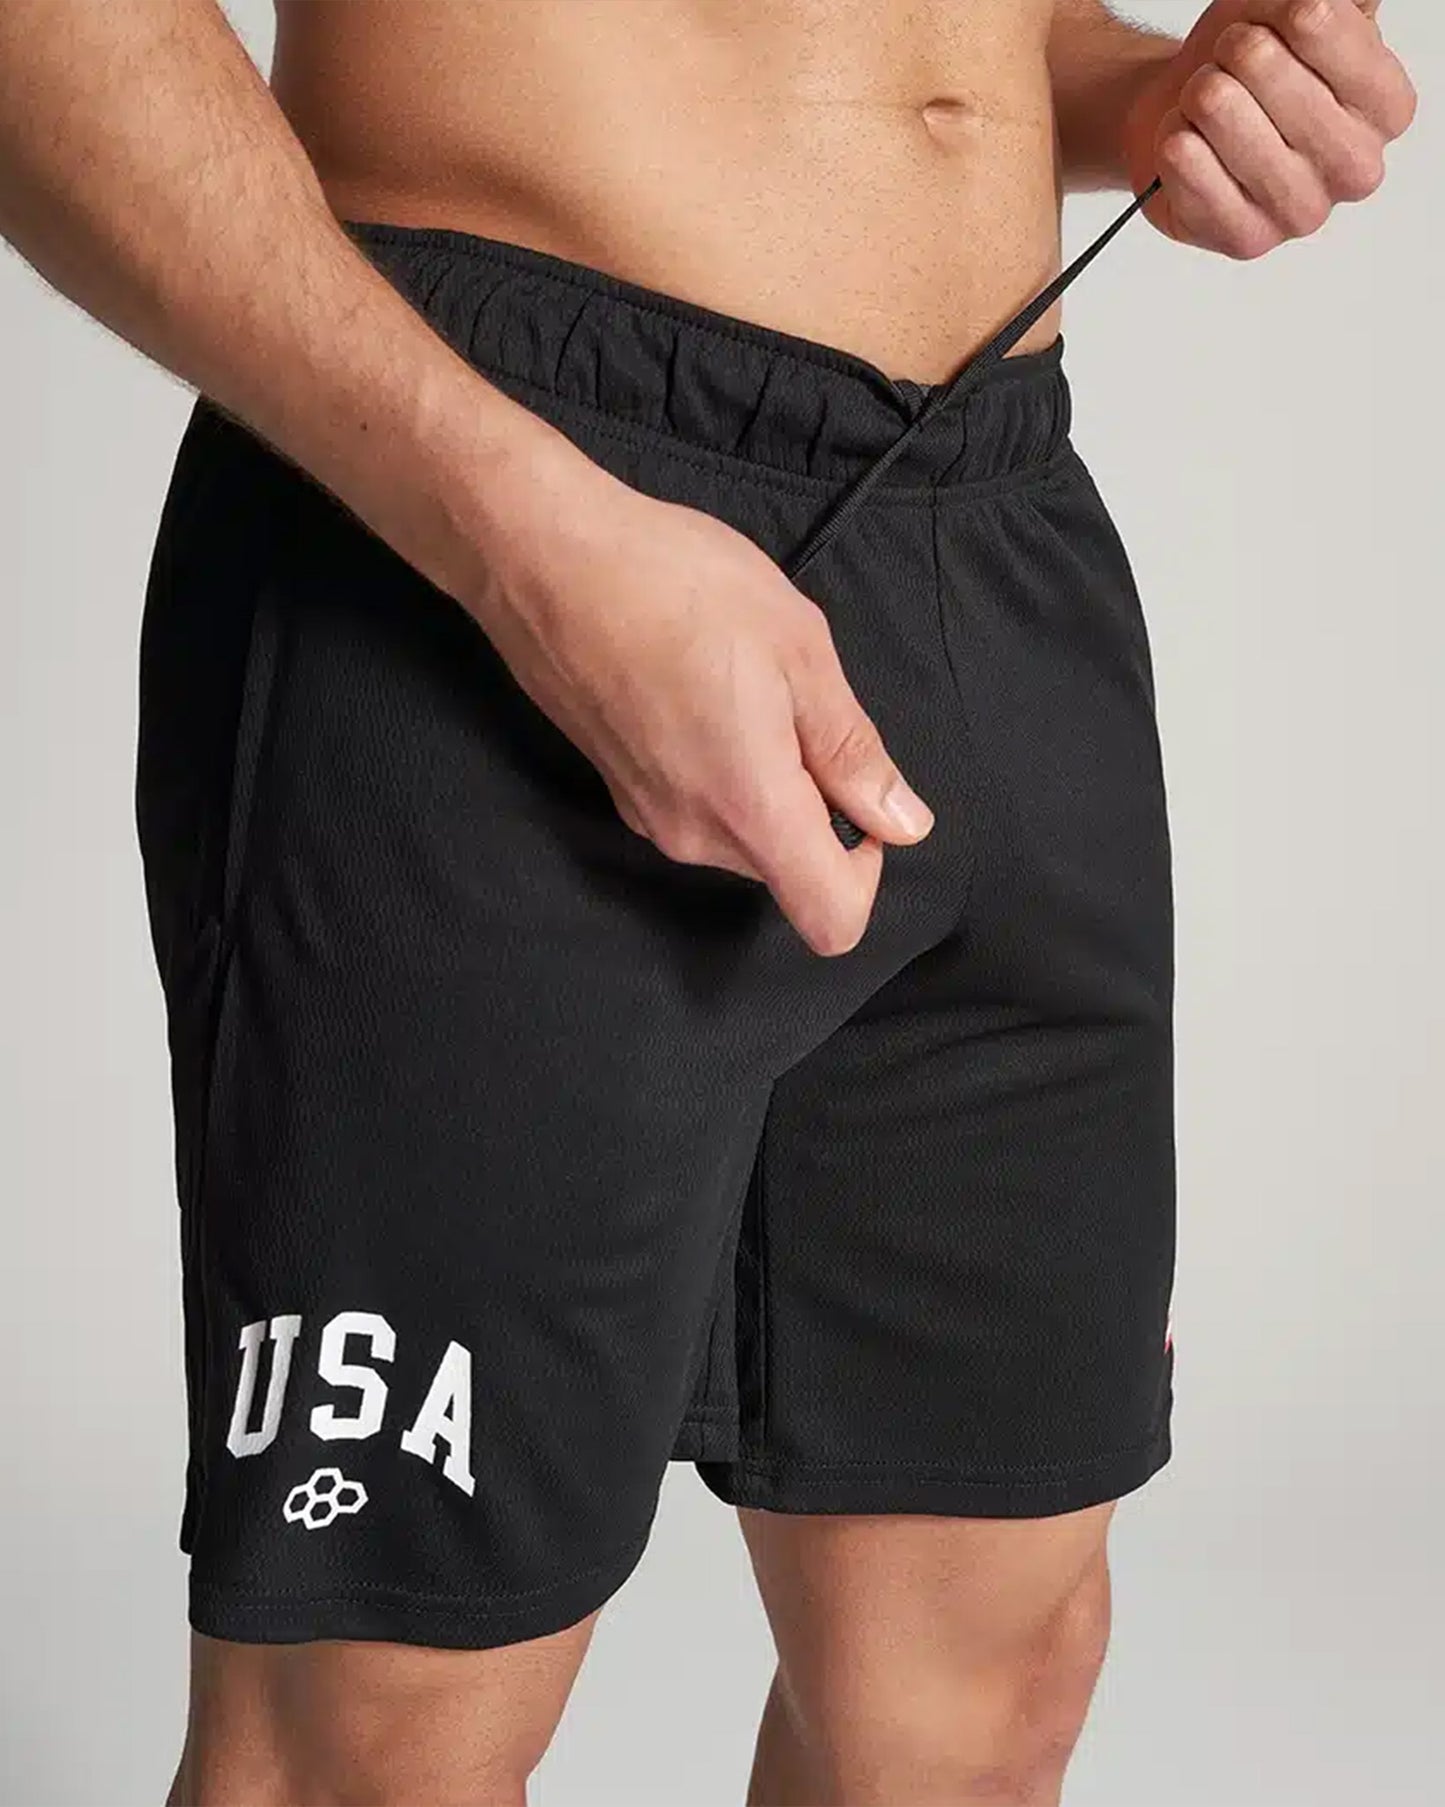 RUDIS USA FLAG 8" Mesh Shorts